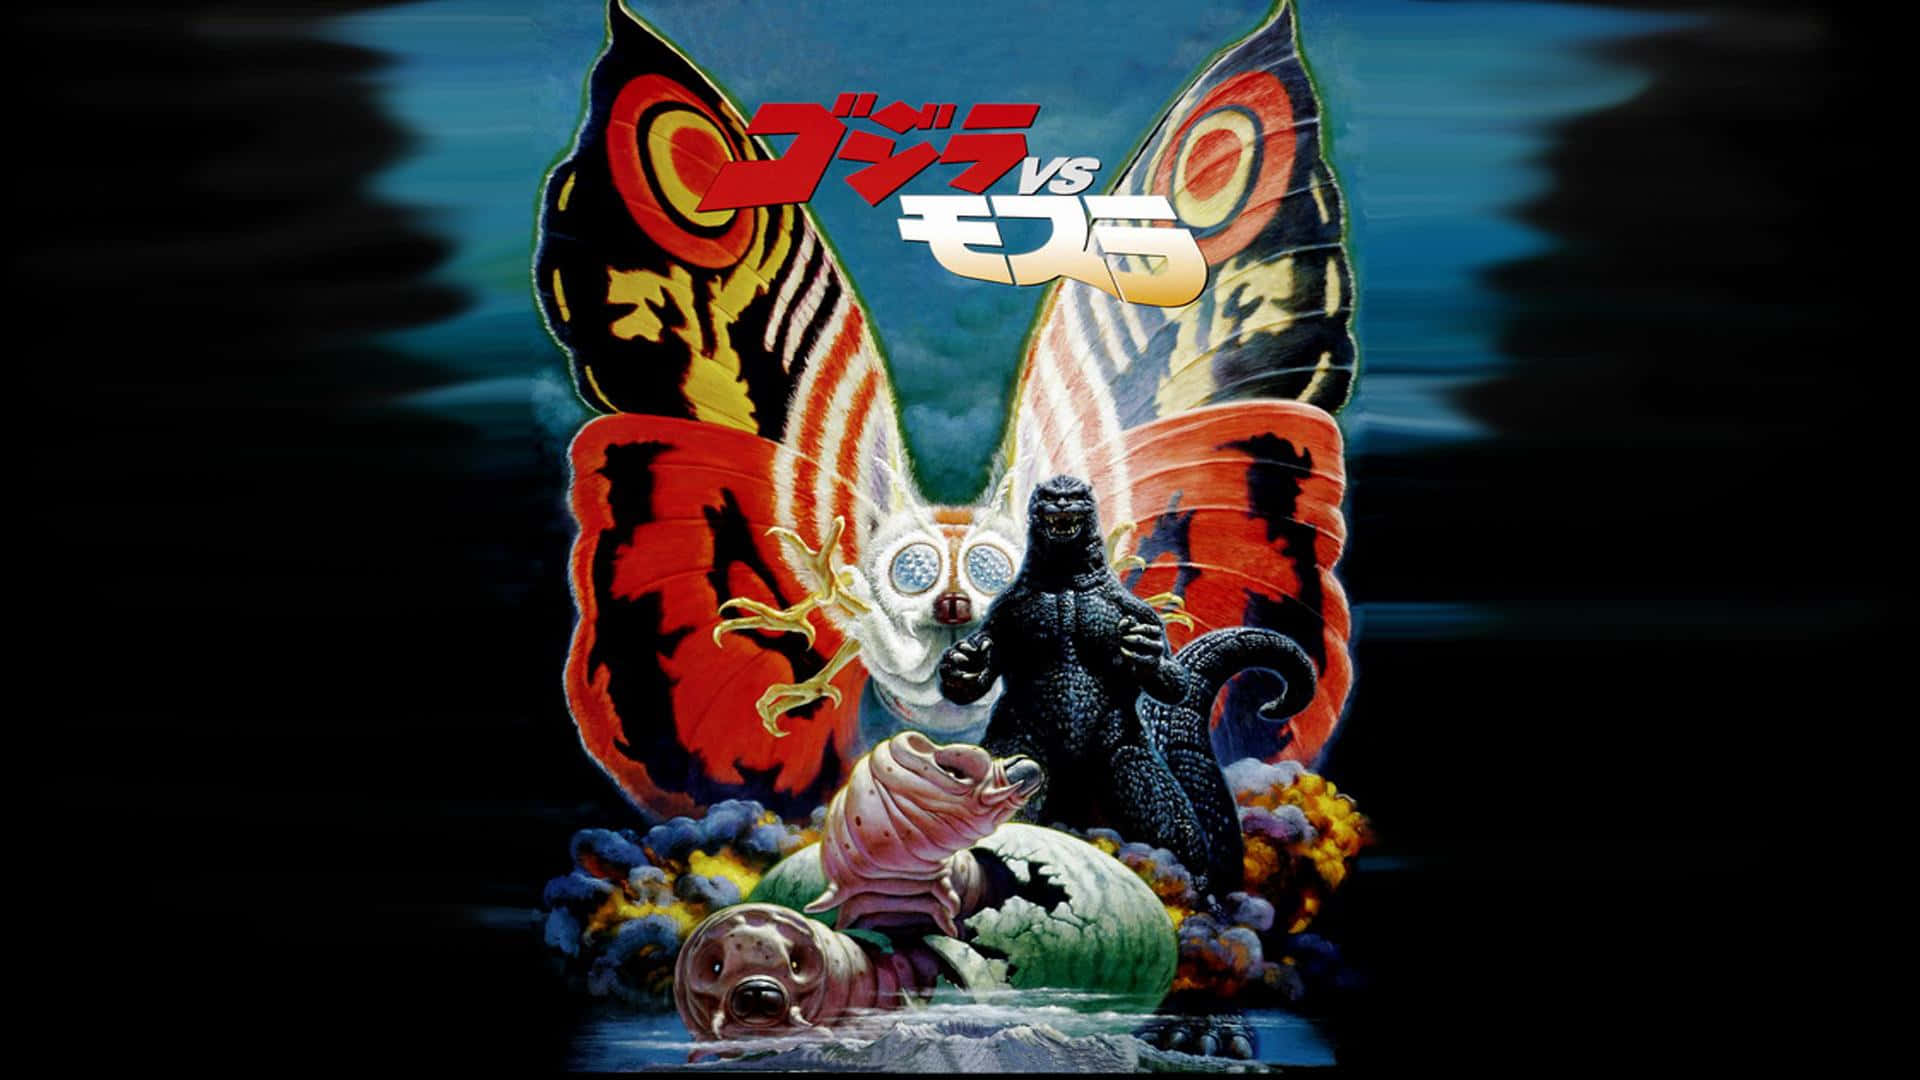 Godzilla and Mothra, The Epic Battle Wallpaper